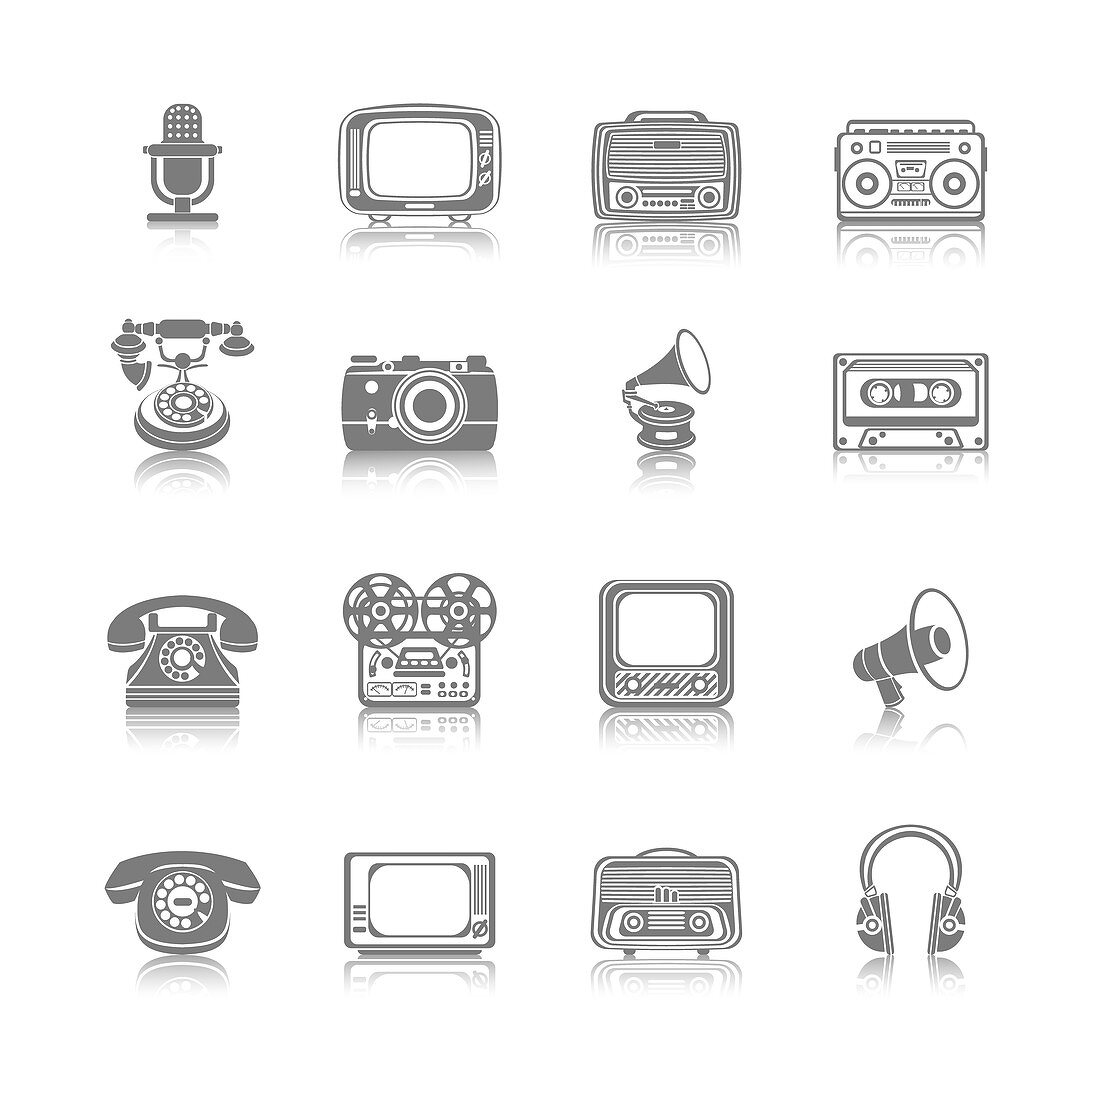 Retro gadgets, illustration